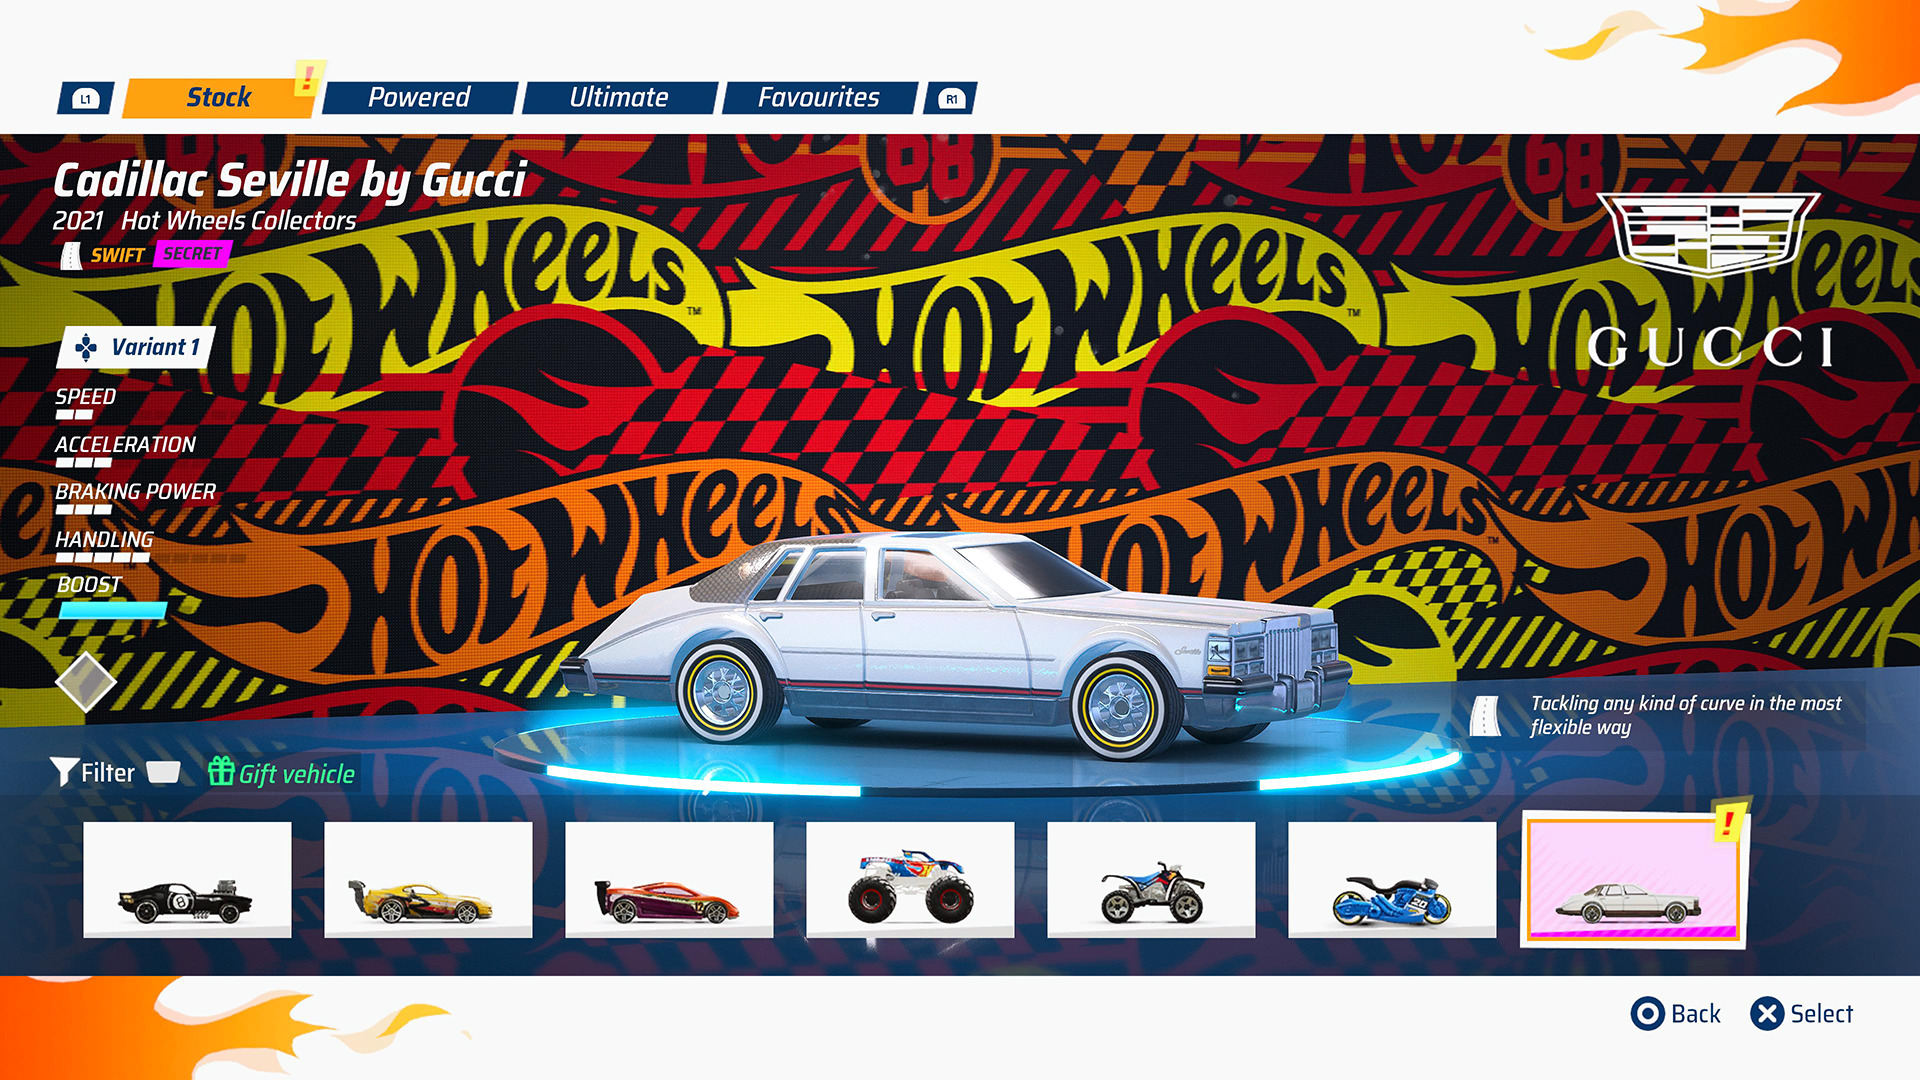 How Mattel Shrinks Cars Into Hot Wheels (Crash Test Included)